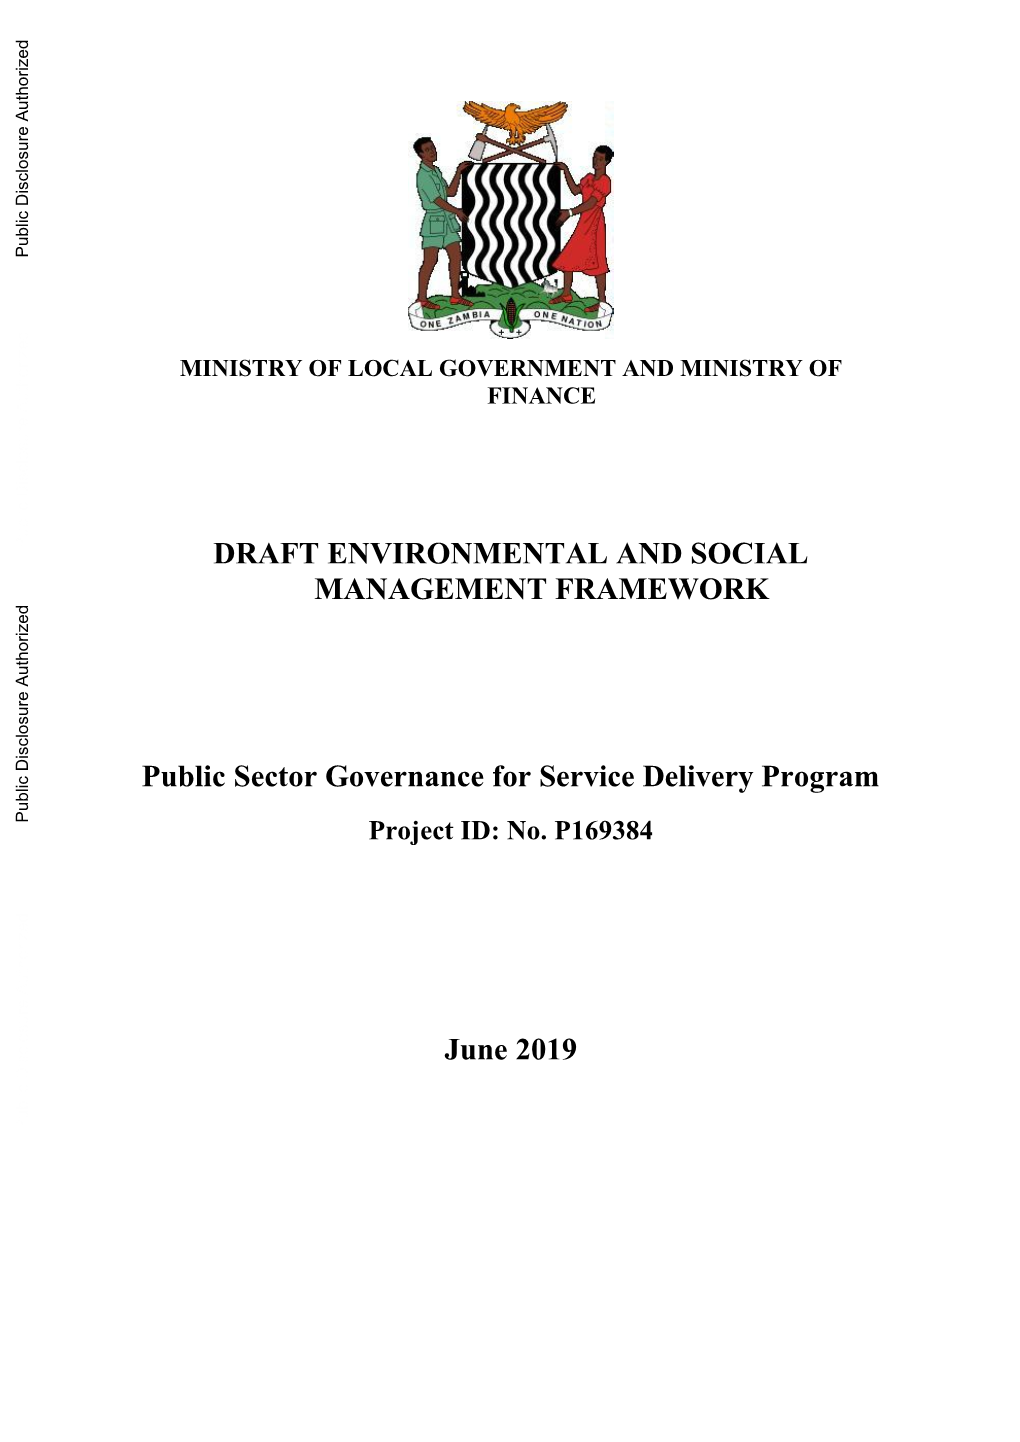 Draft Environmental and Social Management Framework